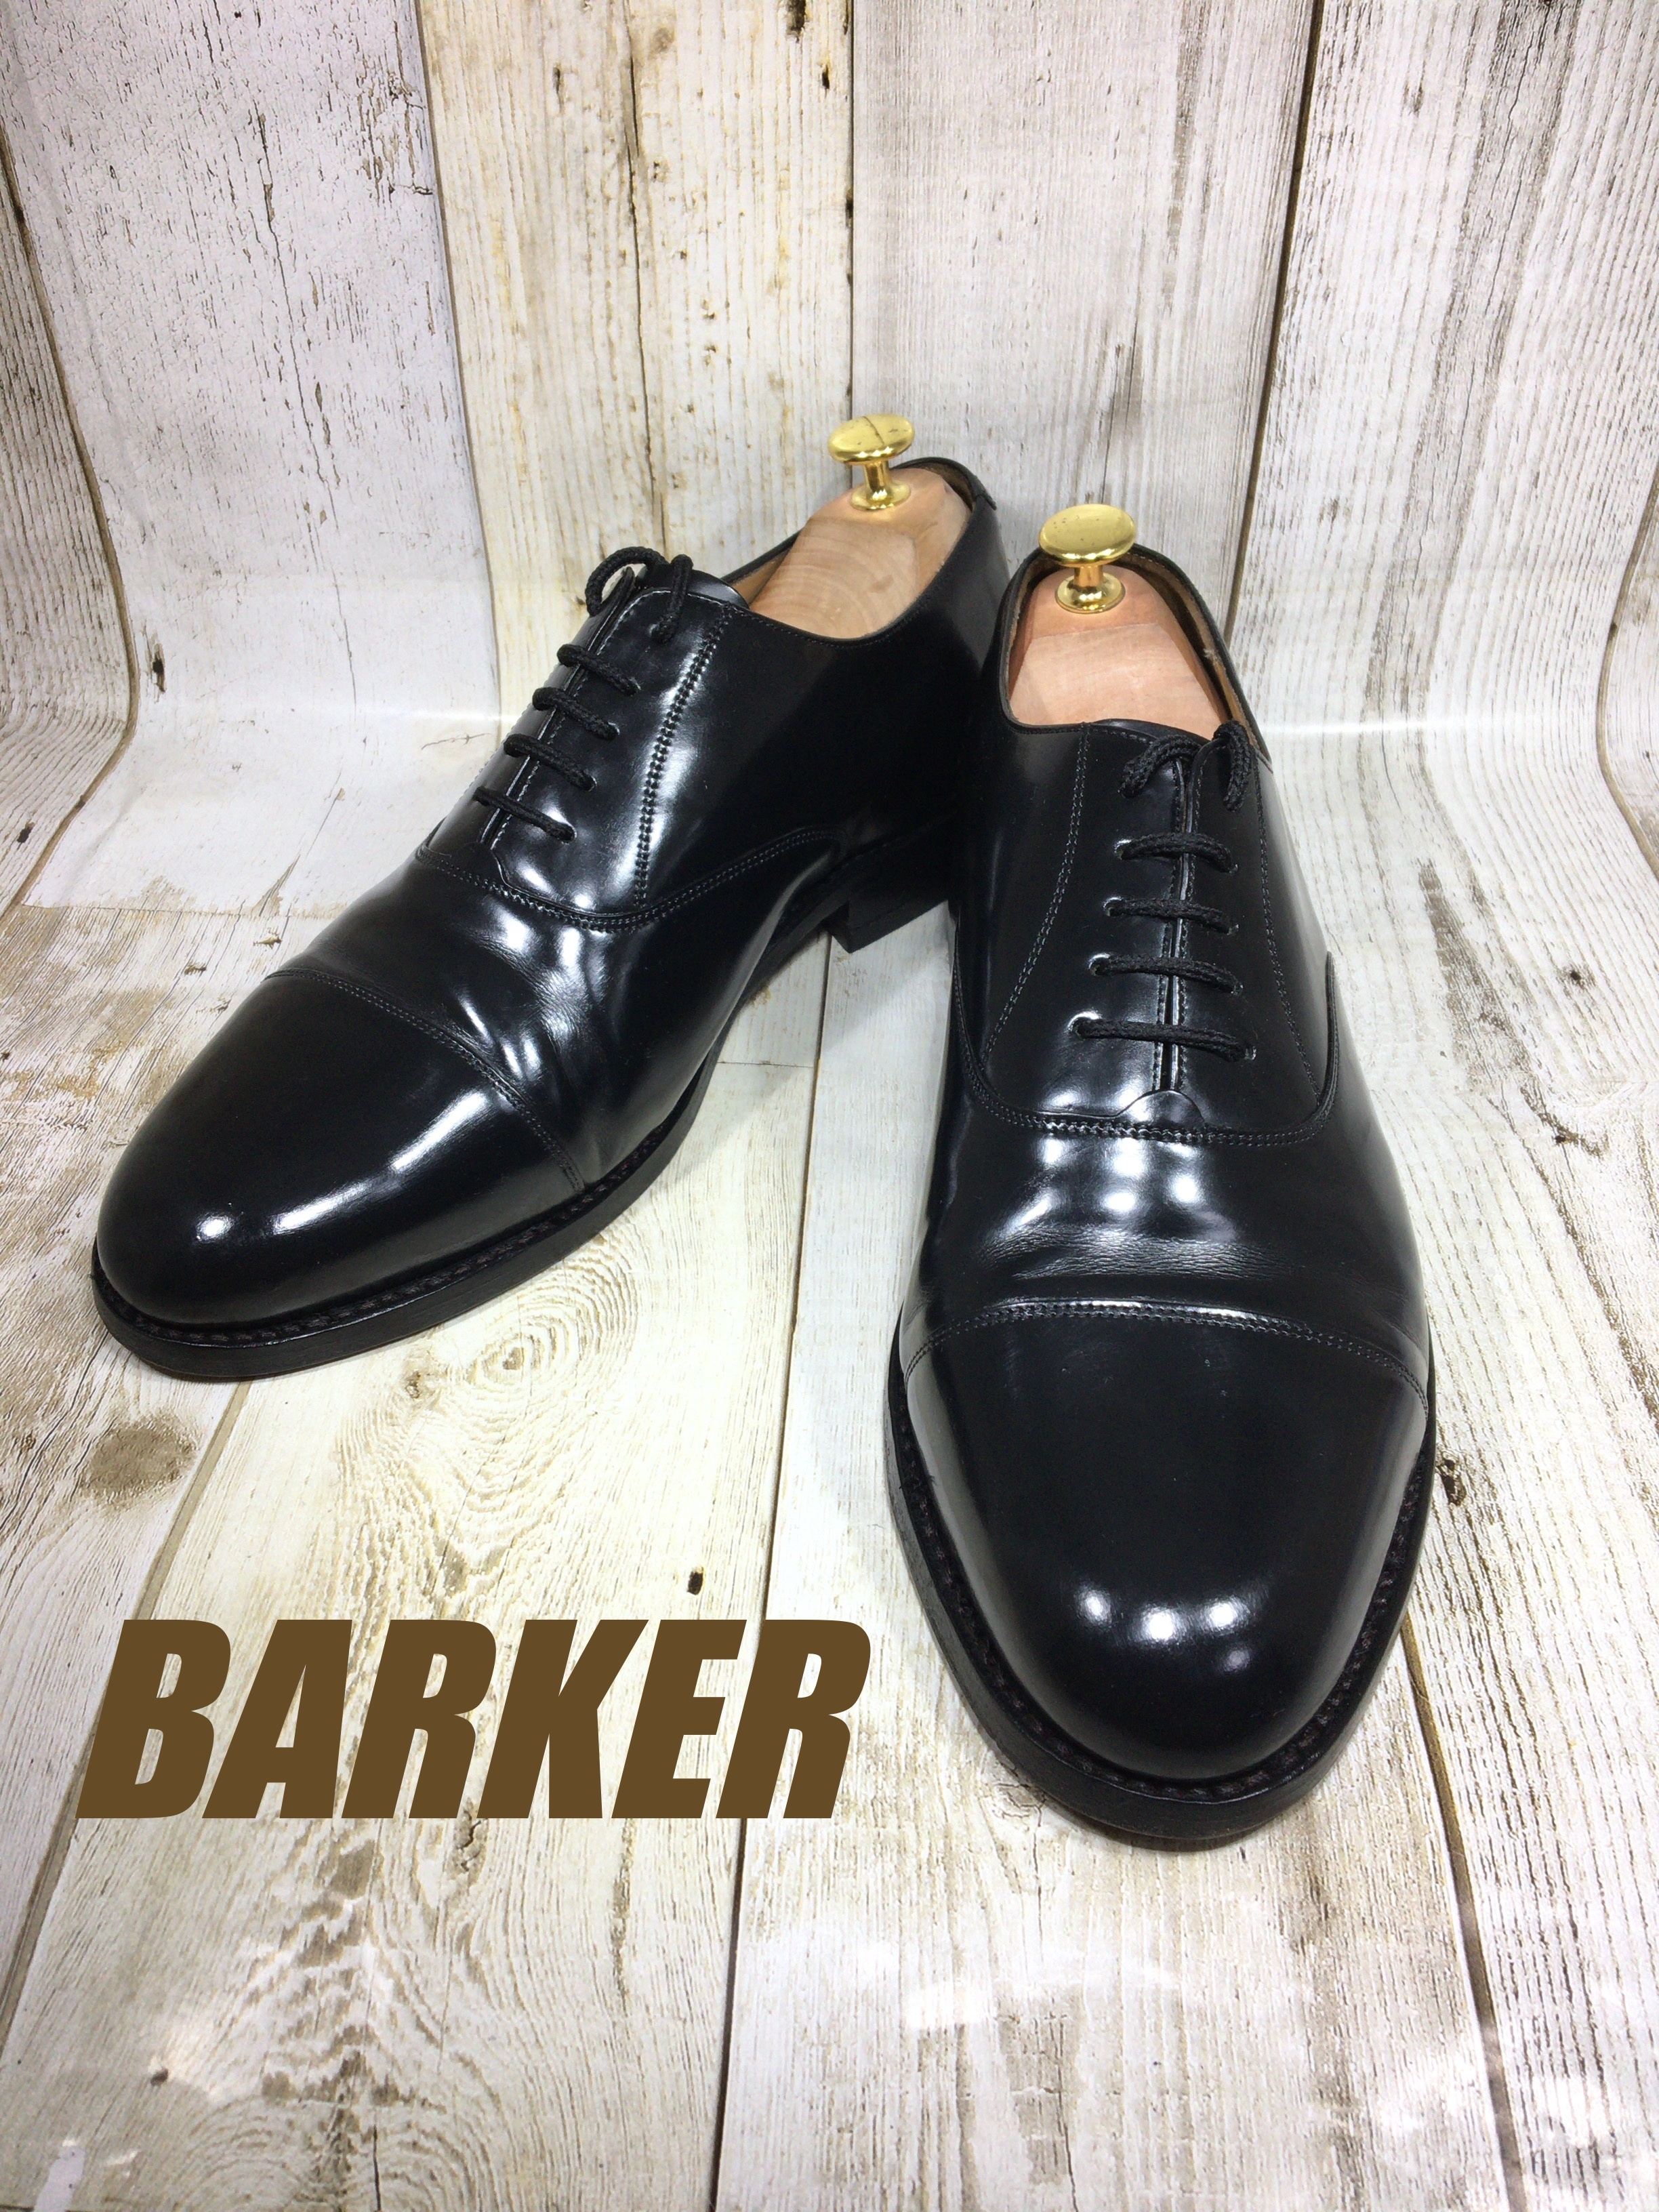 Barker バーカー ストレートチップ Uk9 27 5cm 中古靴 革靴 ブーツ通販専門店 Dafsmart ダフスマート Online Shop